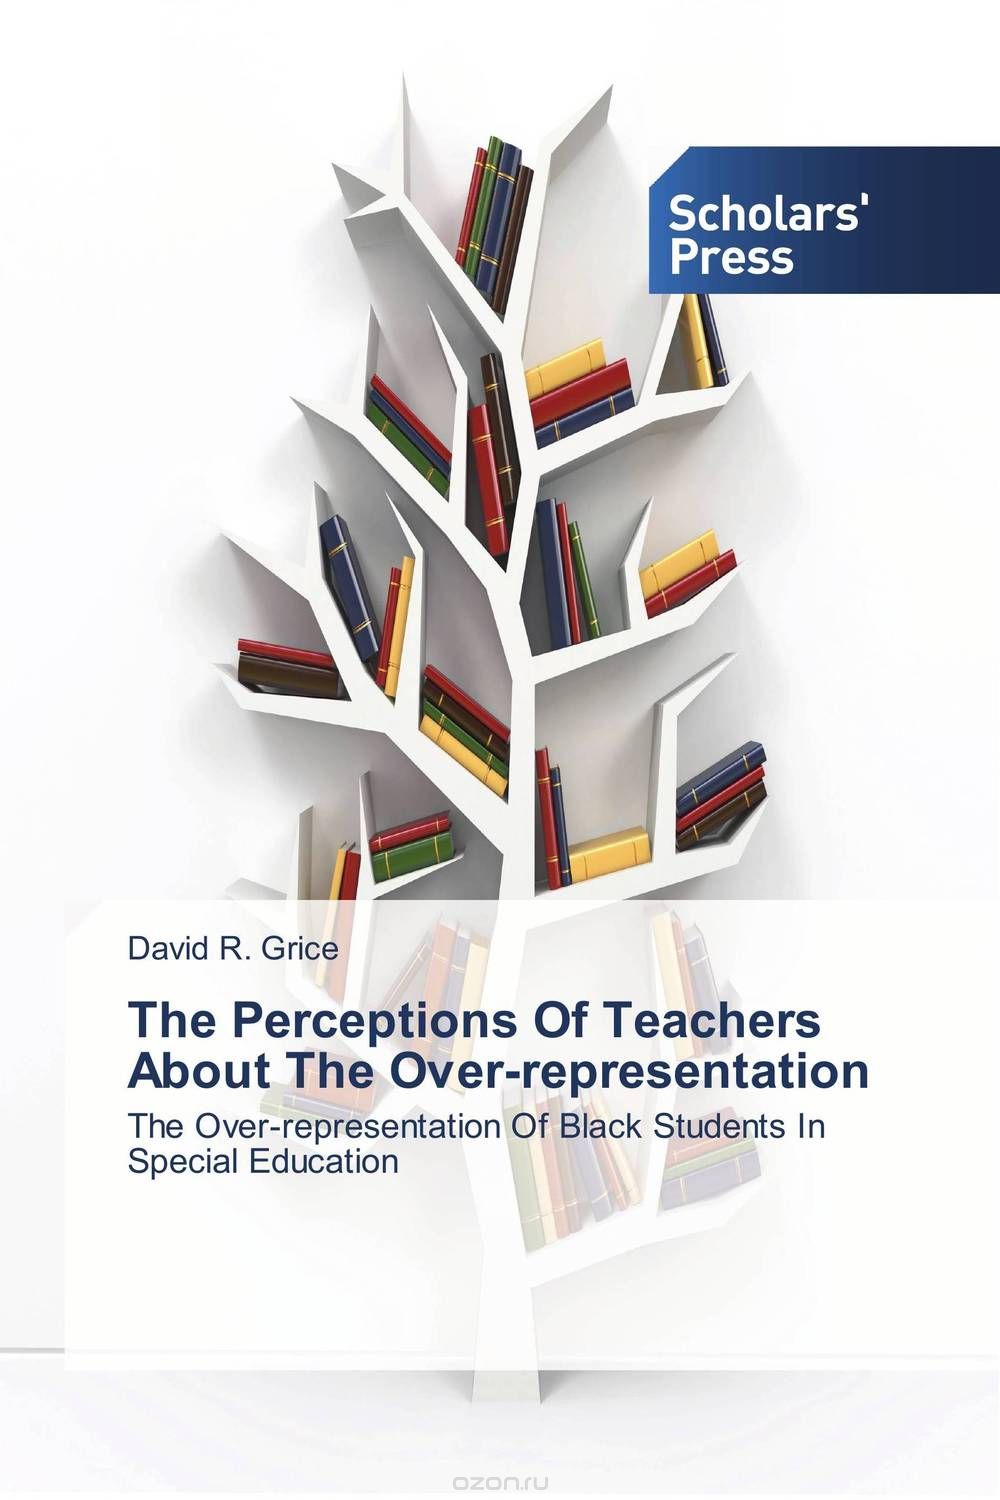 Скачать книгу "The Perceptions Of Teachers About The Over-representation"